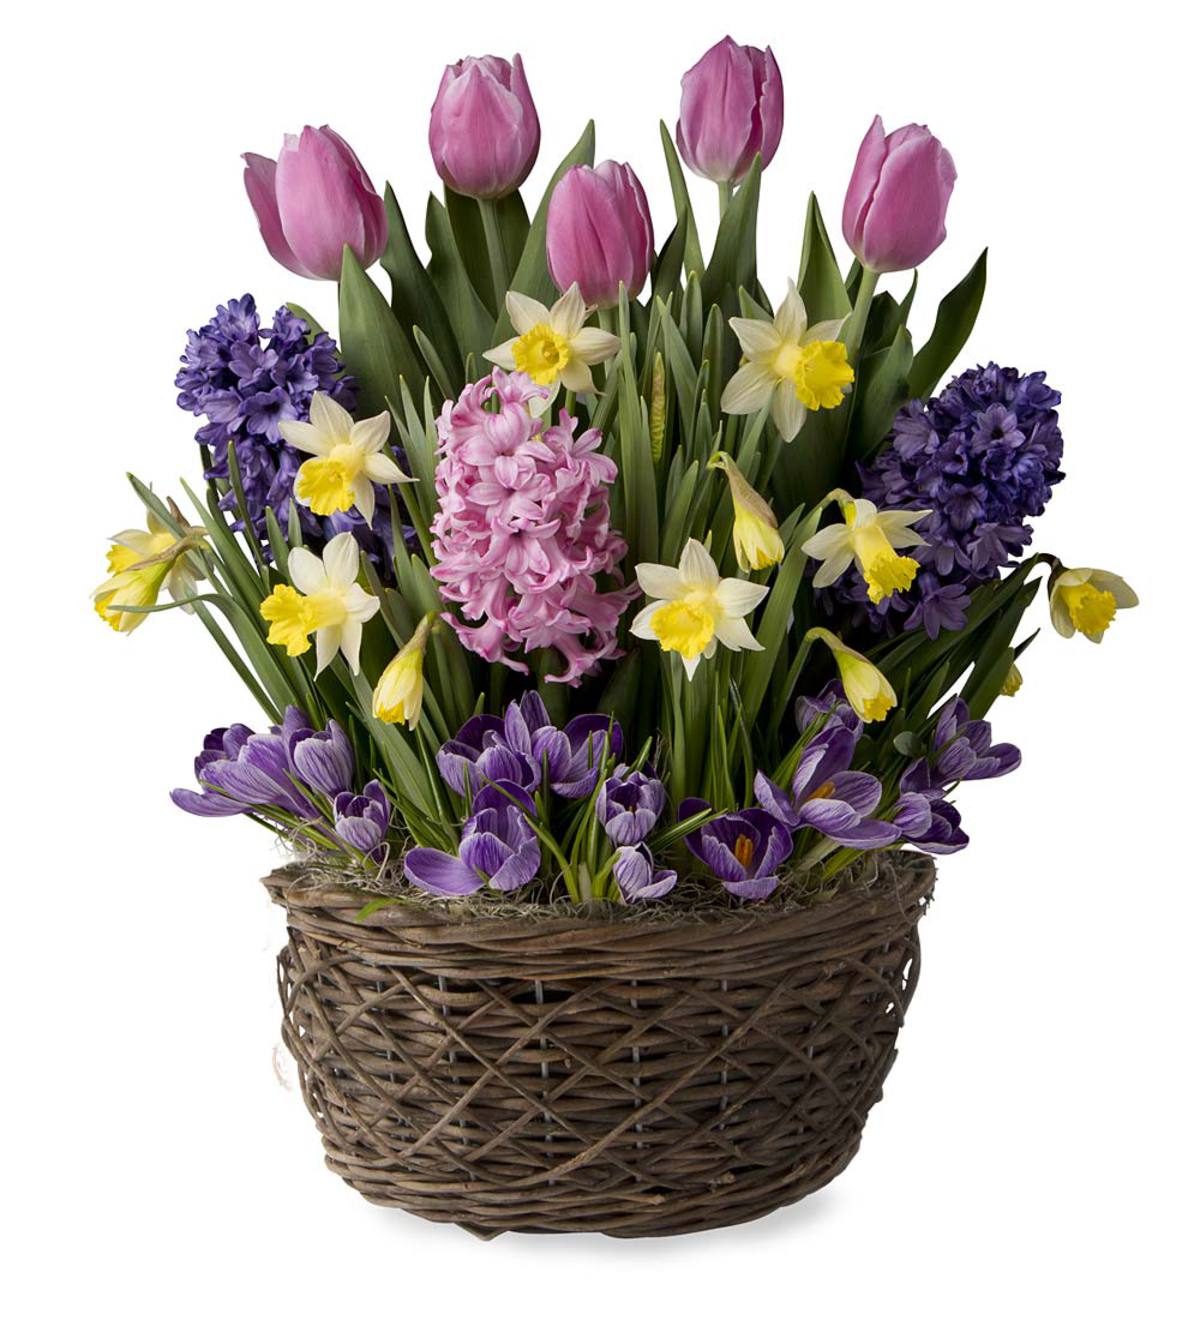 Tulips, Hyacinths, Crocus, Narcissus Flower Bulb Gift Garden - Ships February-June